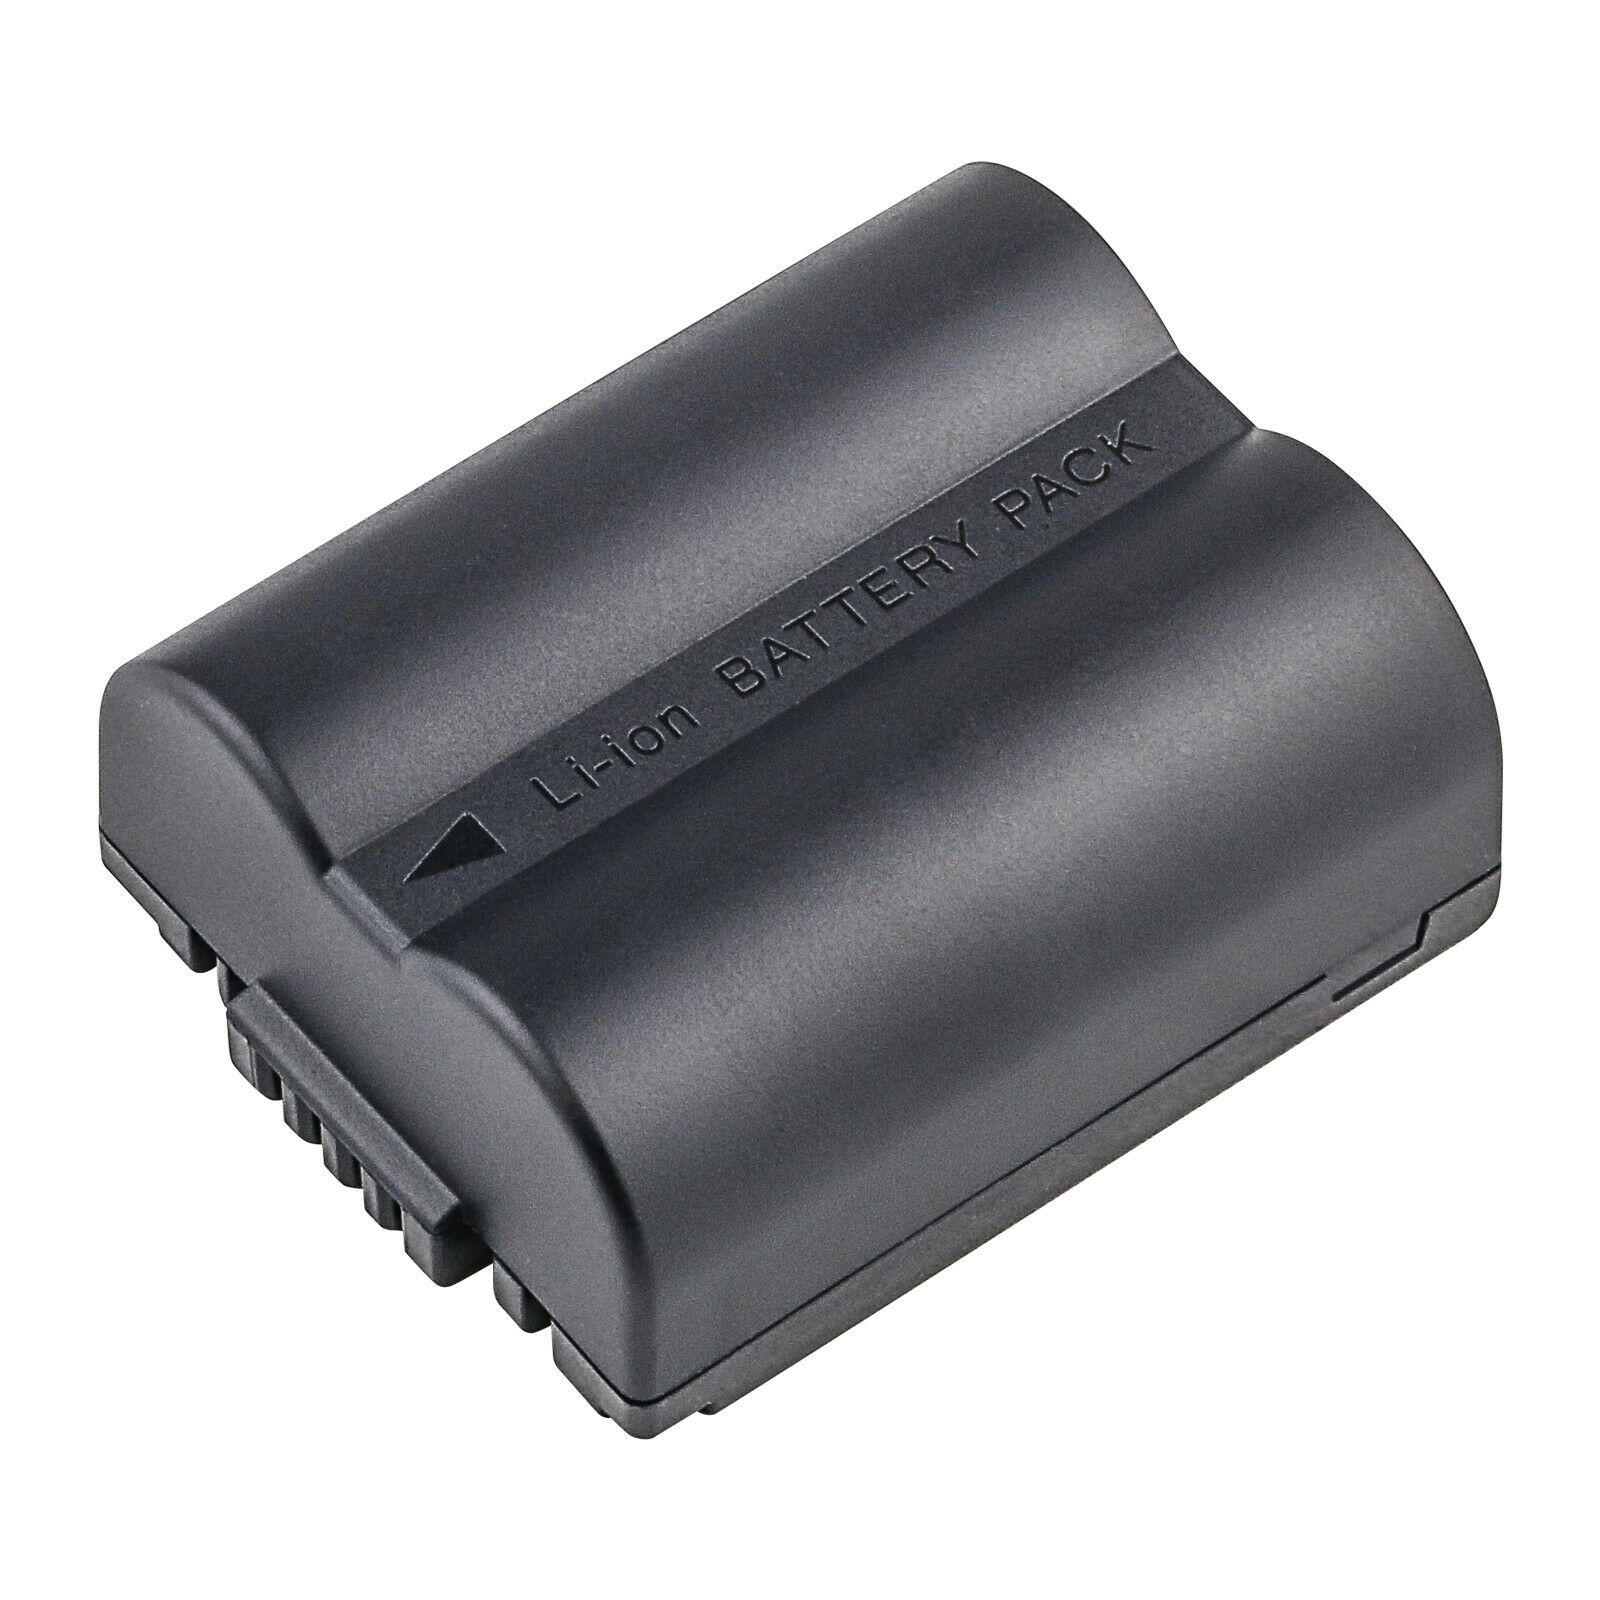 Panasonic Lumix DMC-FZ8EB-S Camera Battery